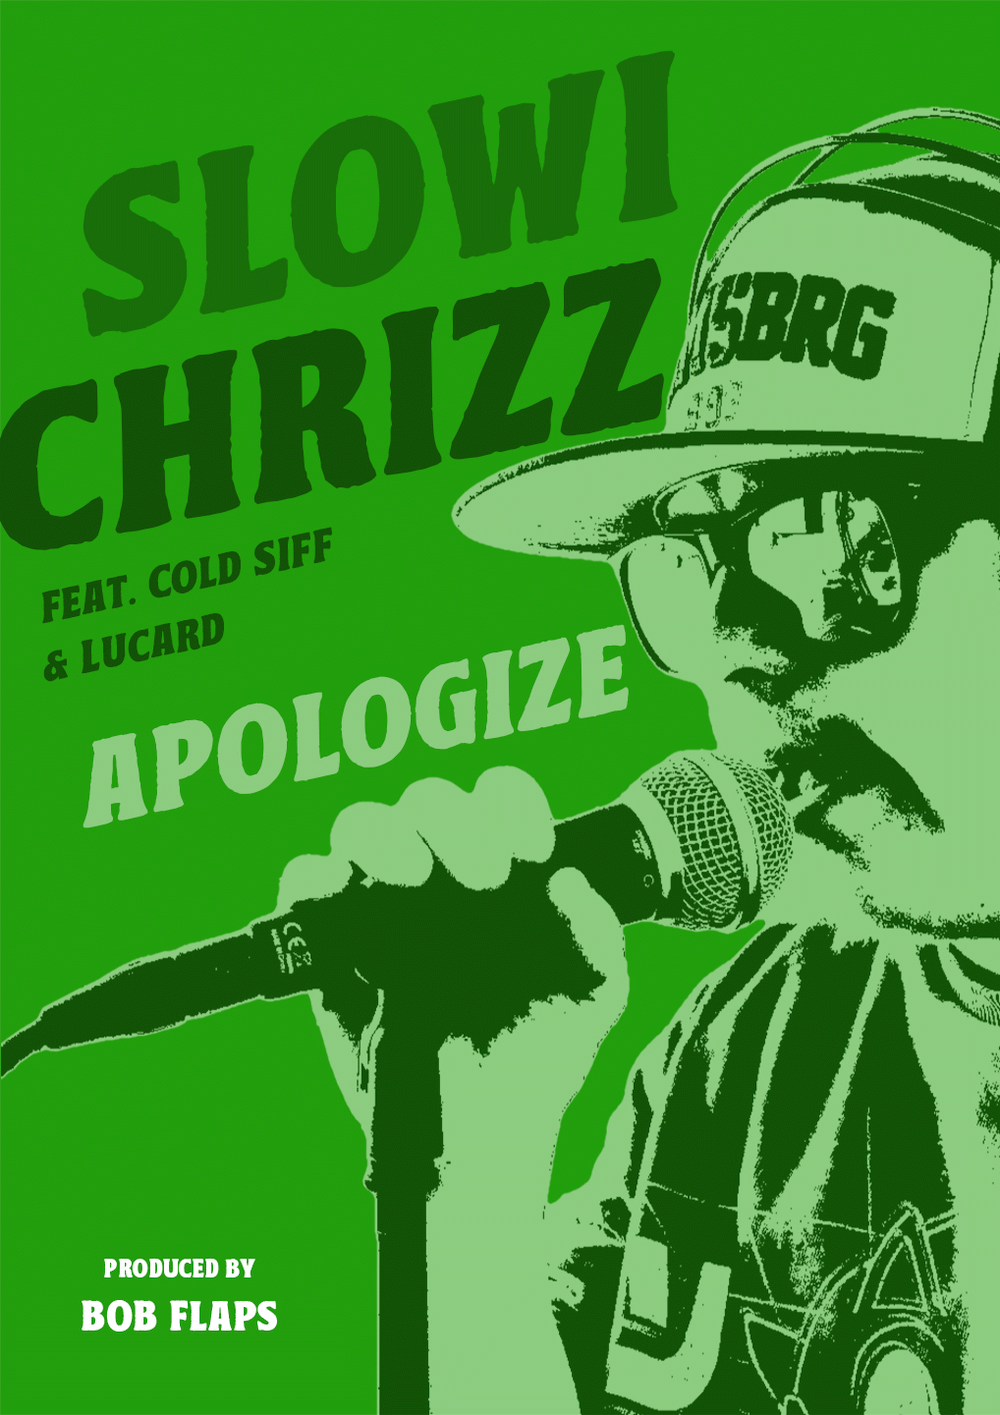 Slowi Chrizz - Apologize